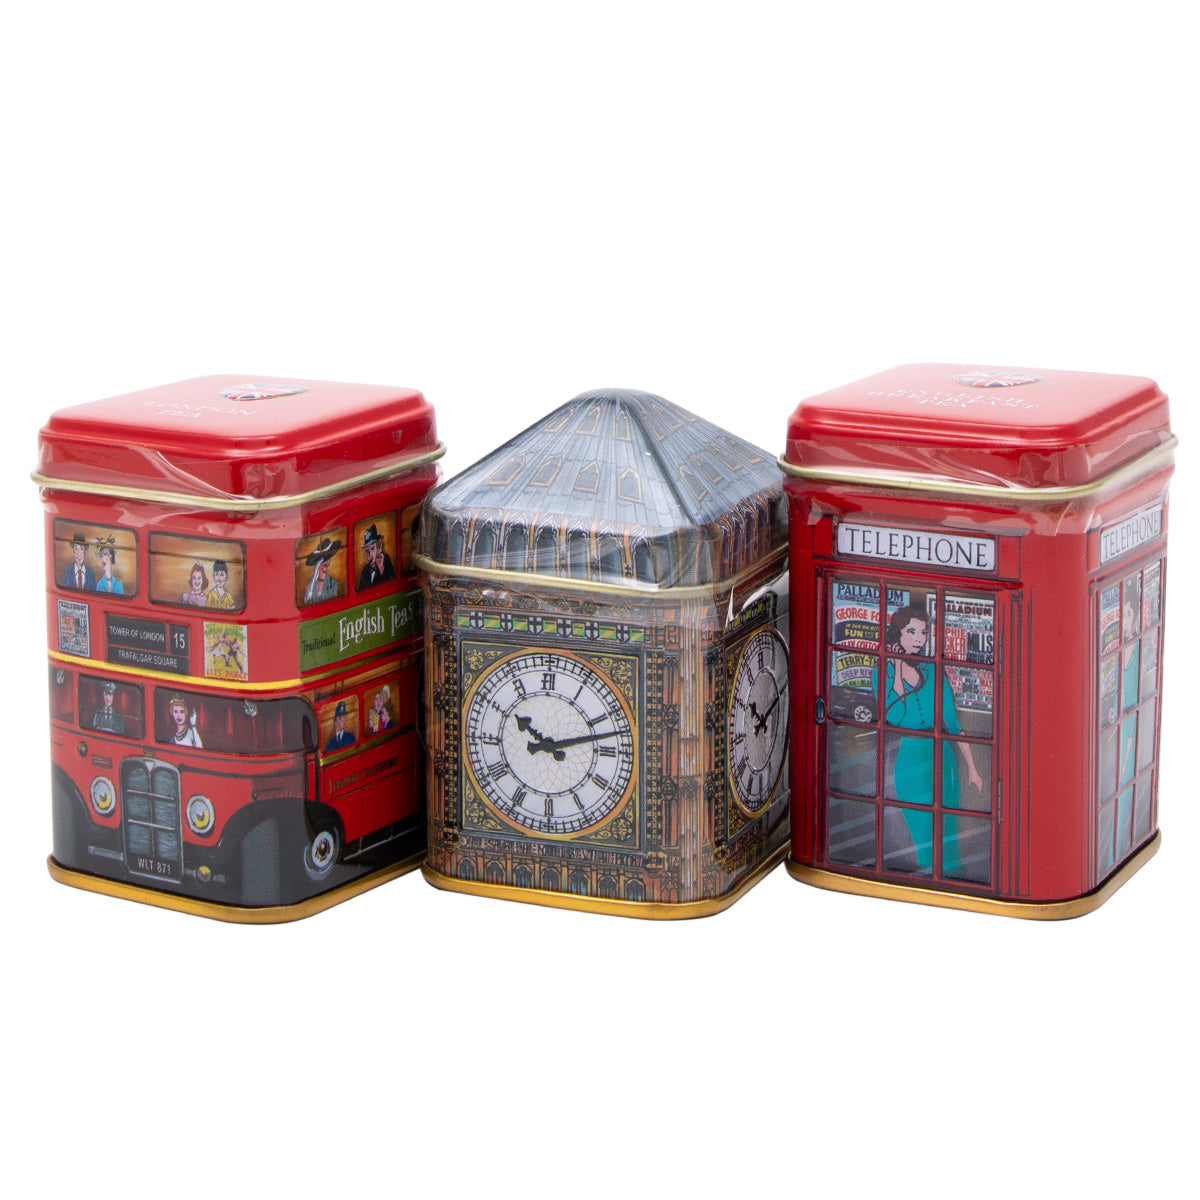 Traditions of London - Bus / Big Ben / Telephone - Loose Leaf Tea Gift Set 1